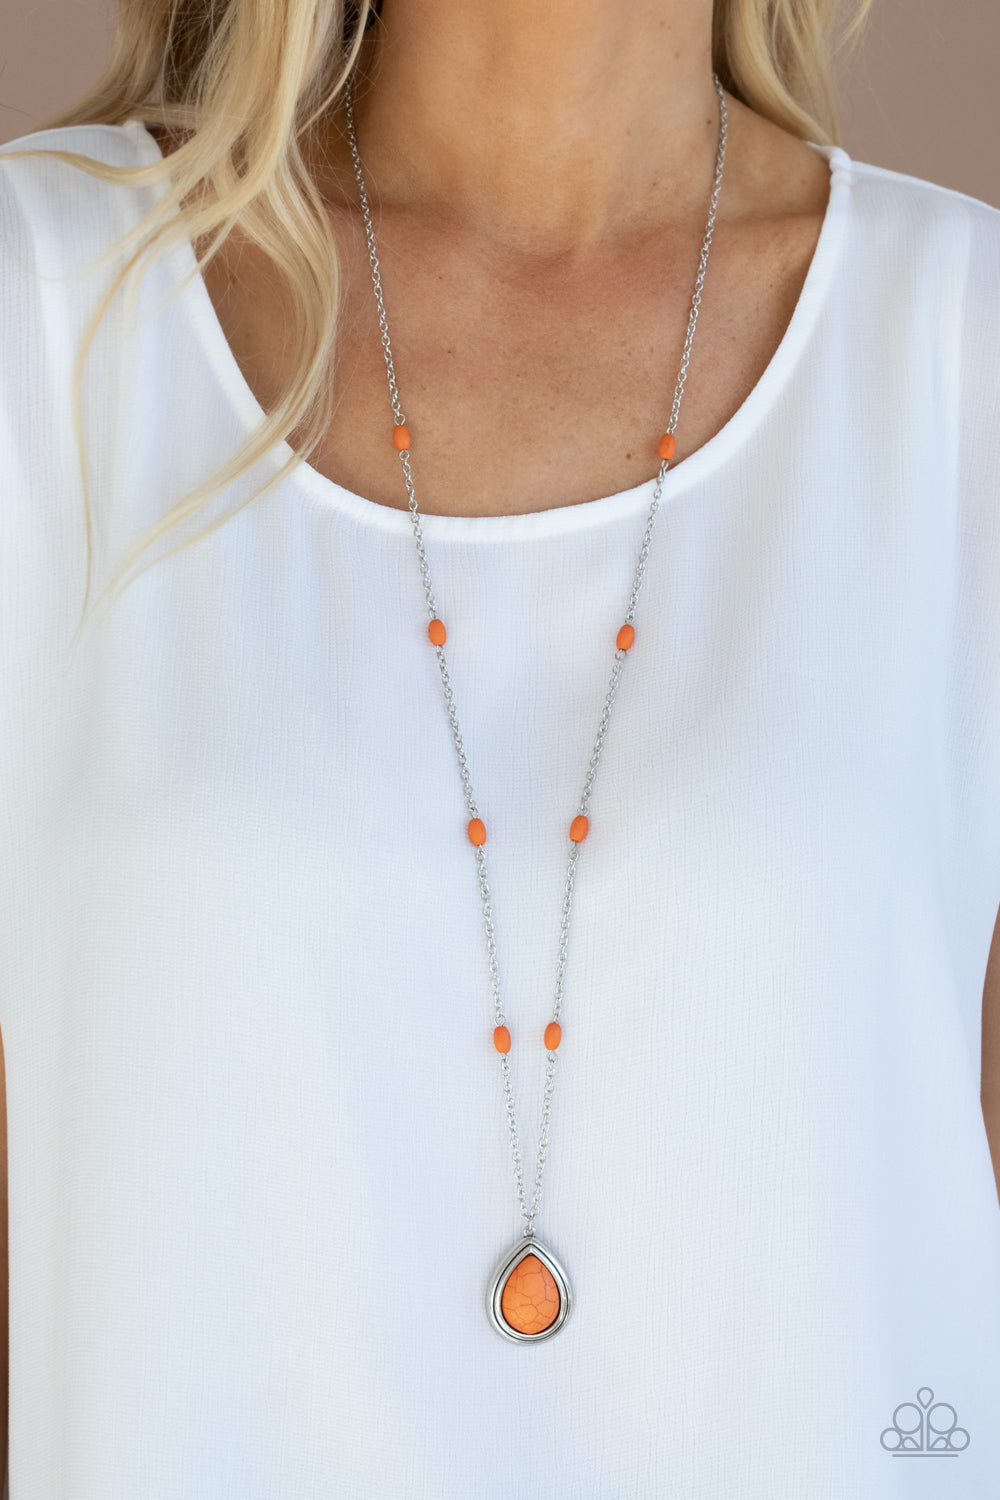 Paparazzi Accessories - Go Tell It On The Mesa - Orange Necklace